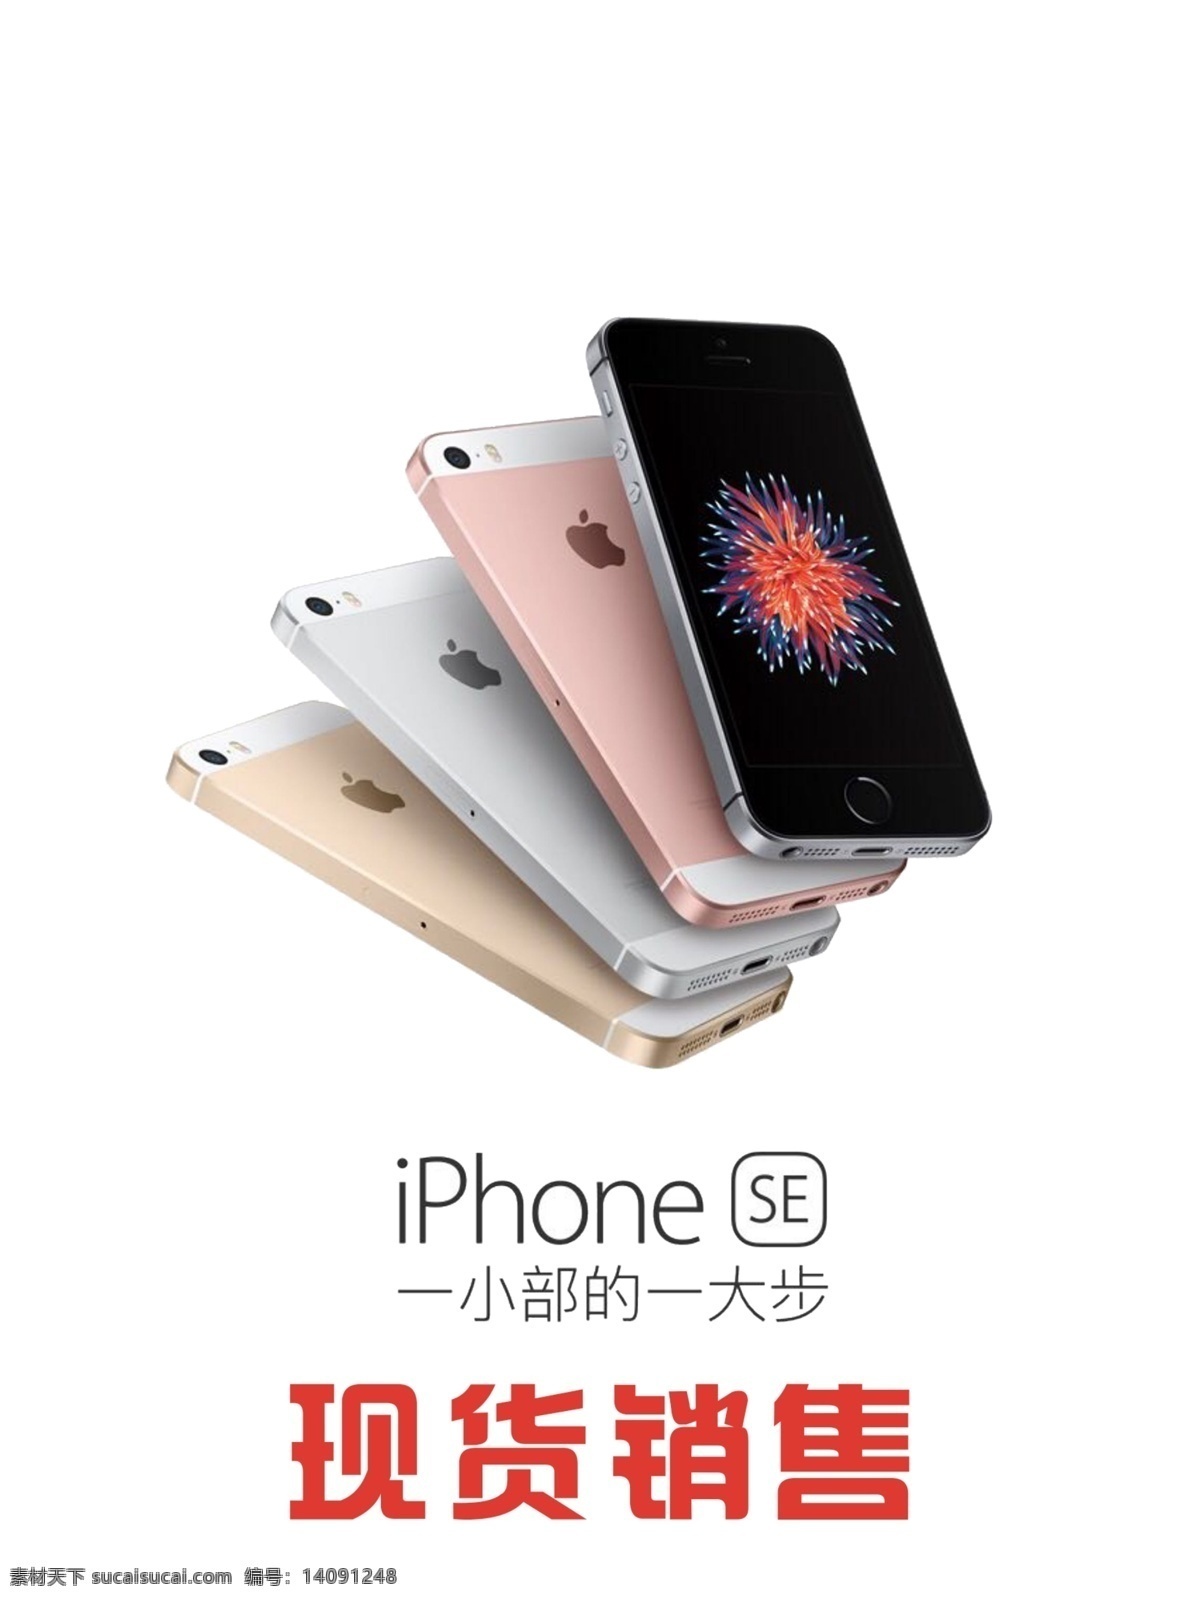 iphone se 现货销售 苹果 苹果手机 广告 活动 海报 iphonese